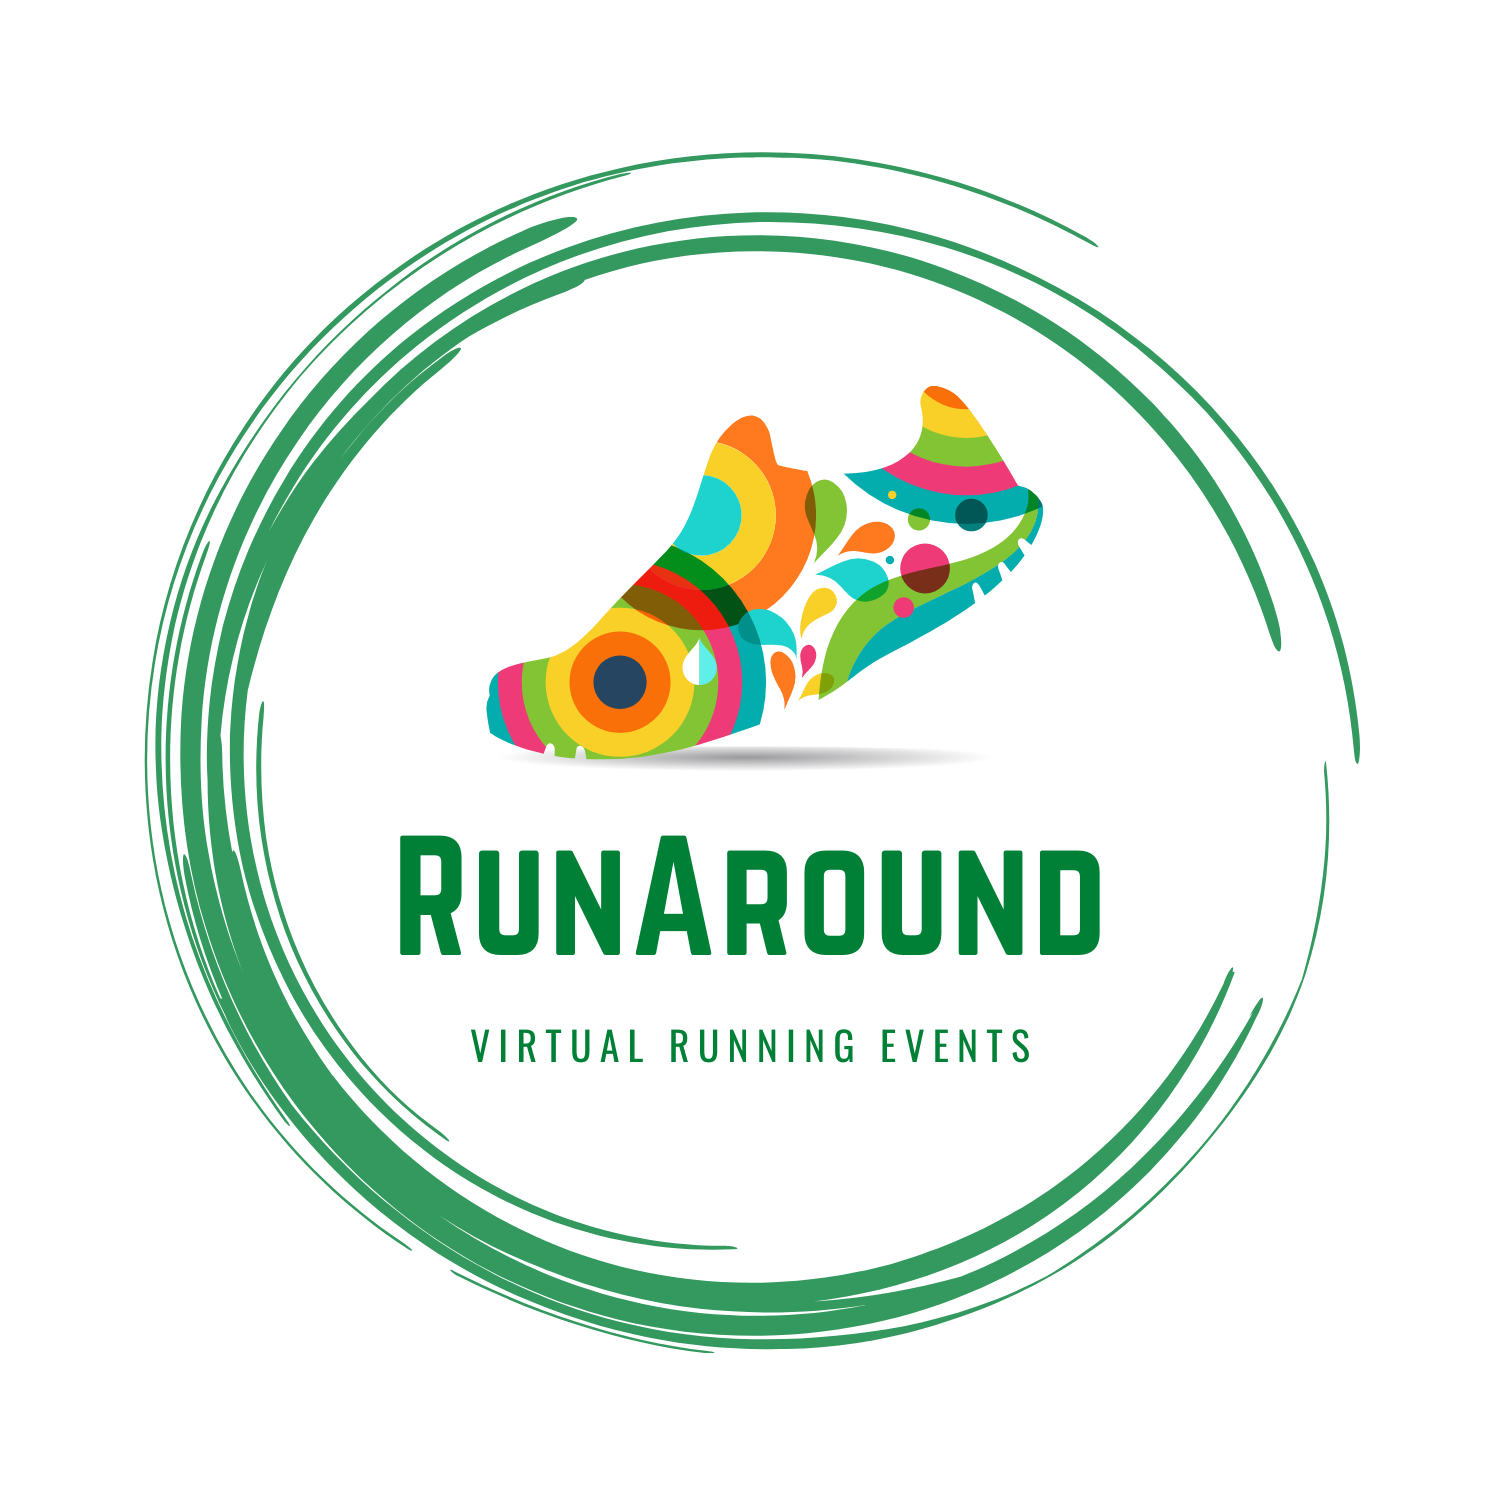 RunAround logo - Virtual Running Events